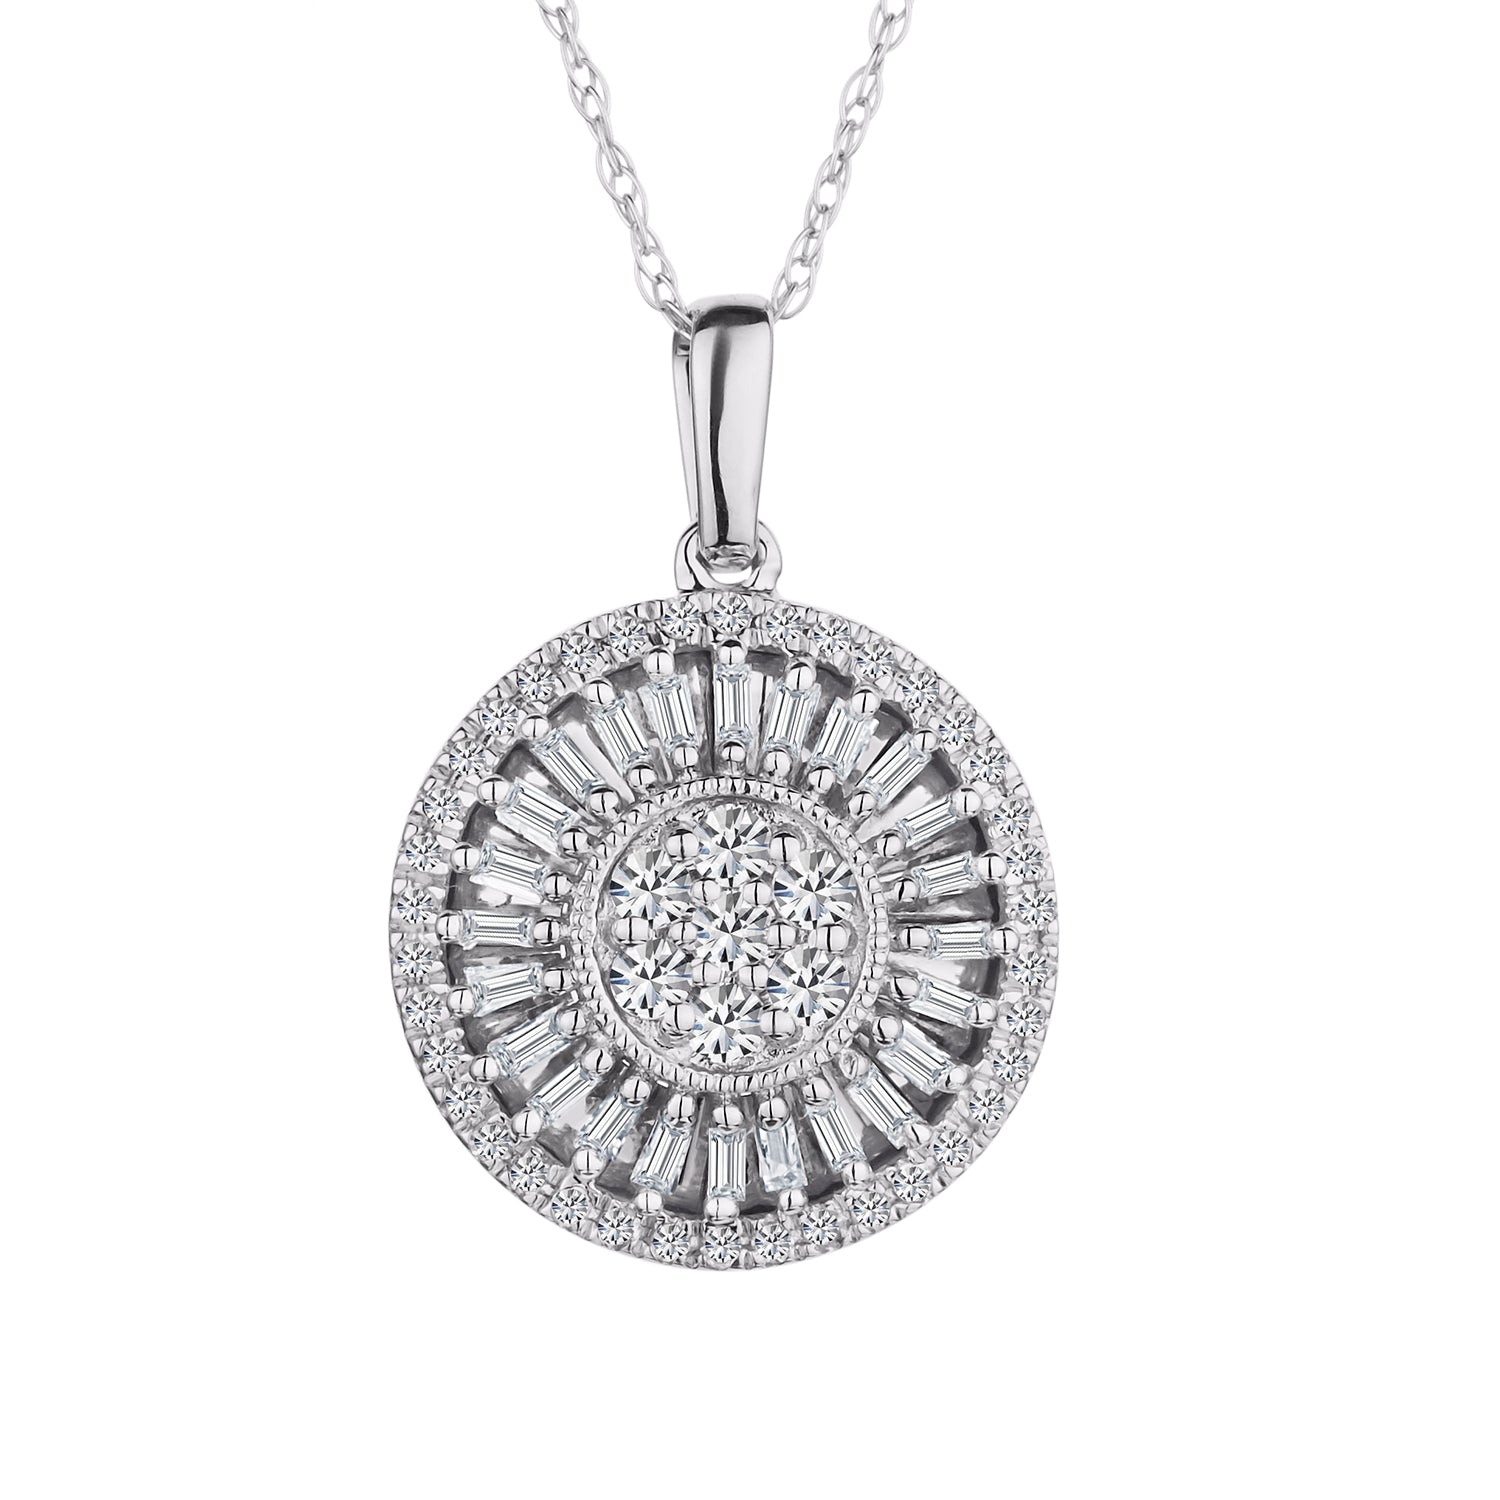 .40 Carat Diamond "Sunrise" Pendant,  10kt White Gold. Necklaces and Pendants. Griffin Jewellery Designs. 